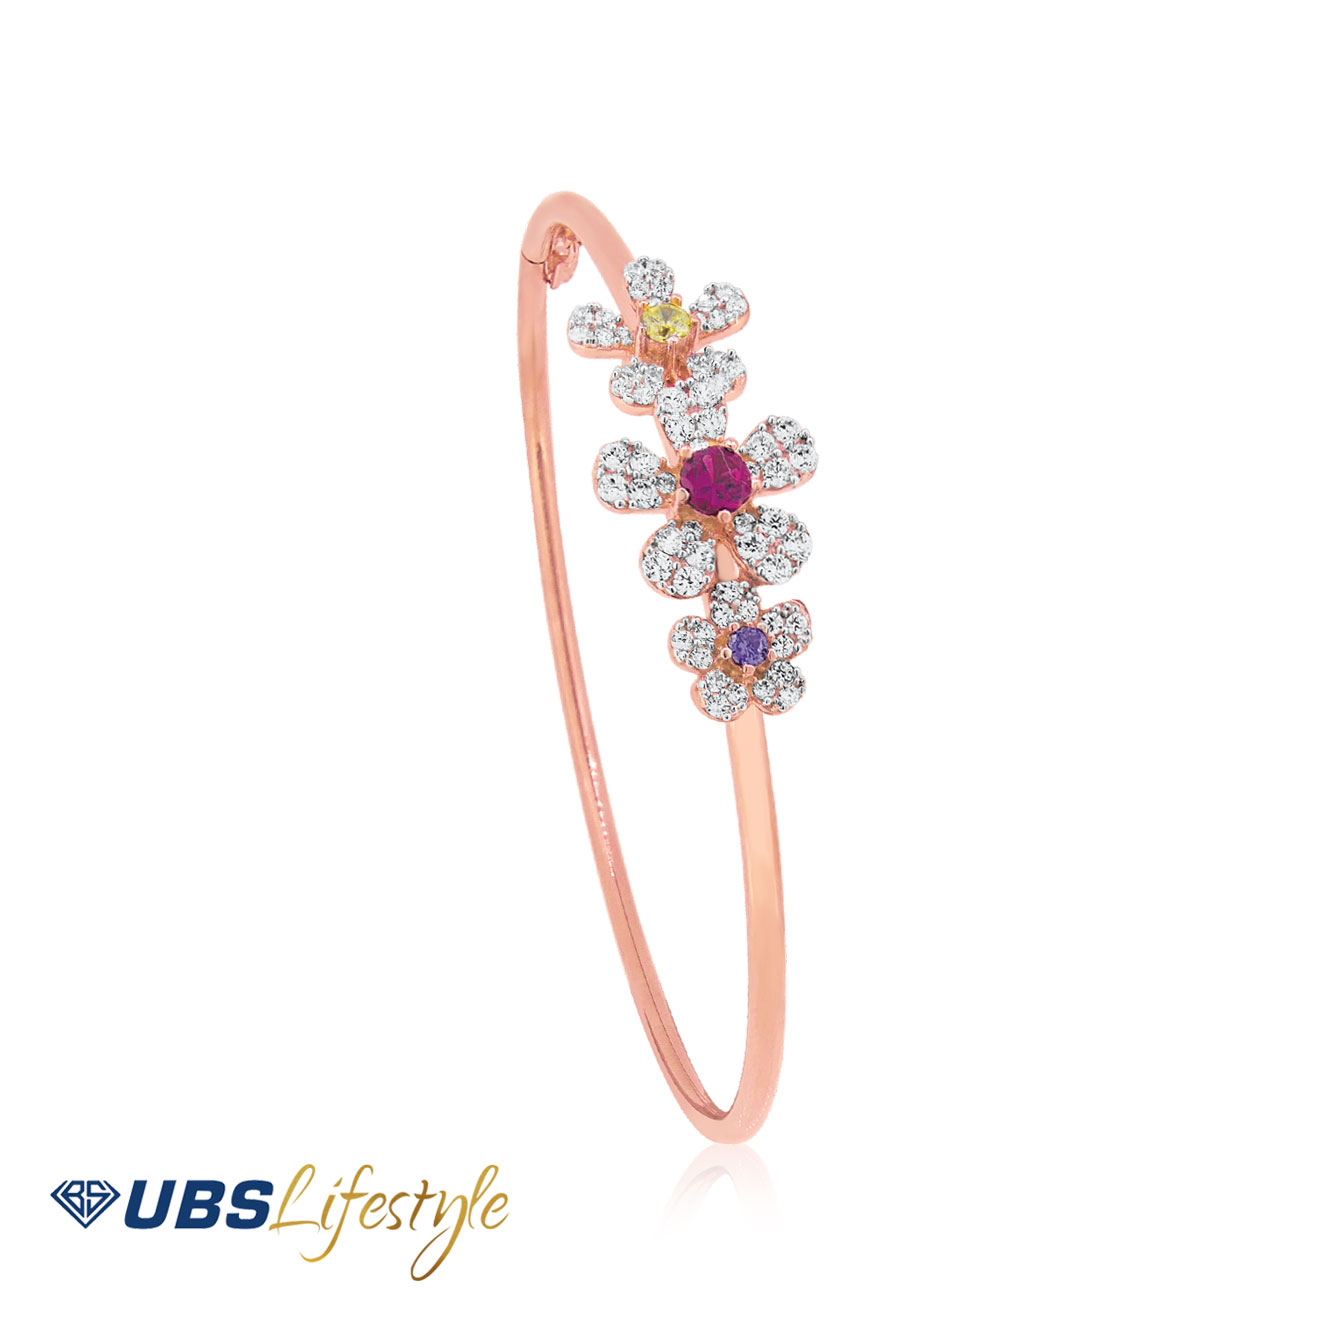  GELANG EMAS UBS  UBSLifestyle Perhiasan Emas  Gold Jewelry